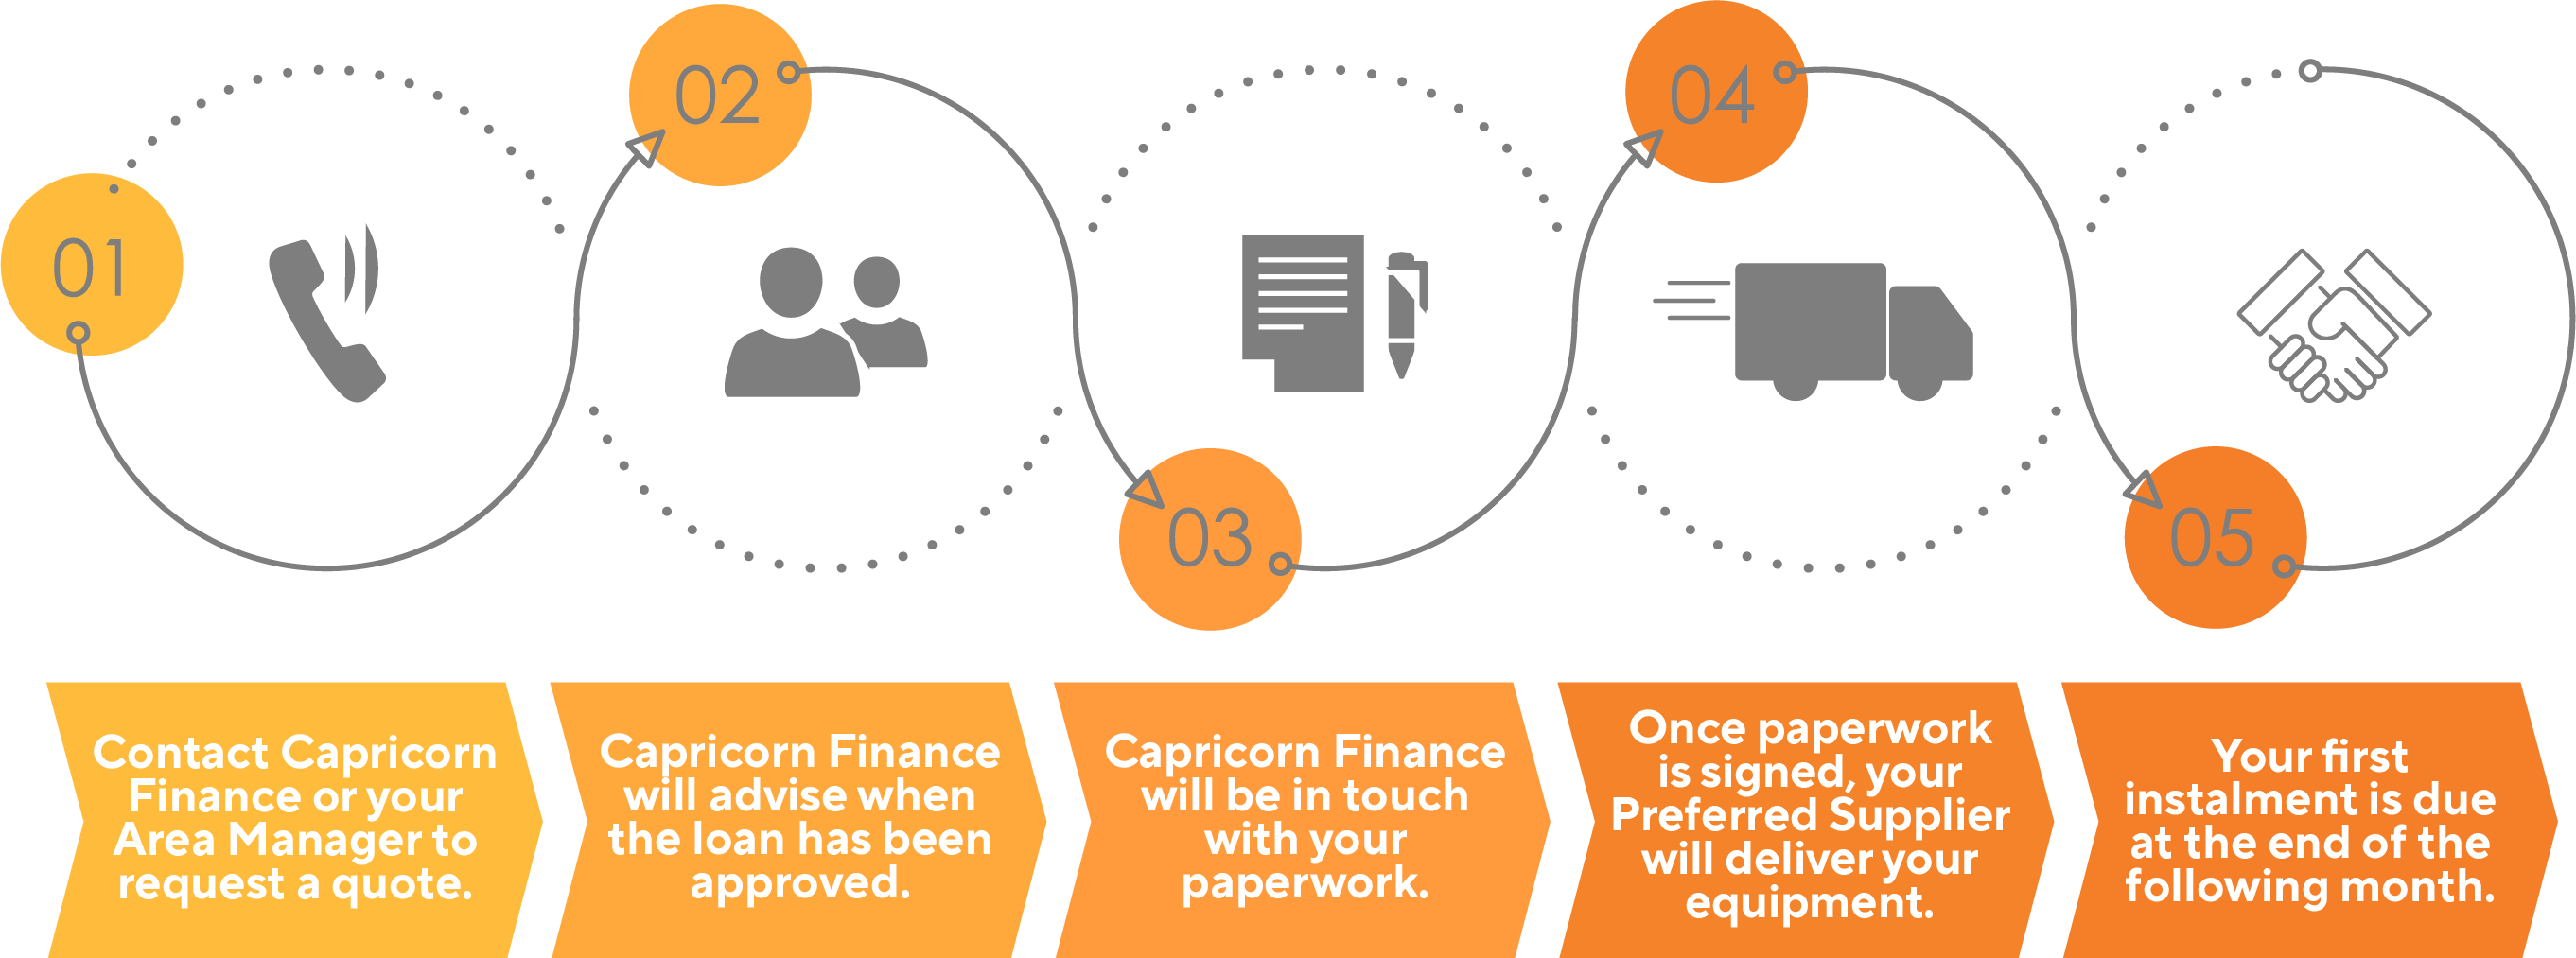 Capricorn Finance Process Flowchart